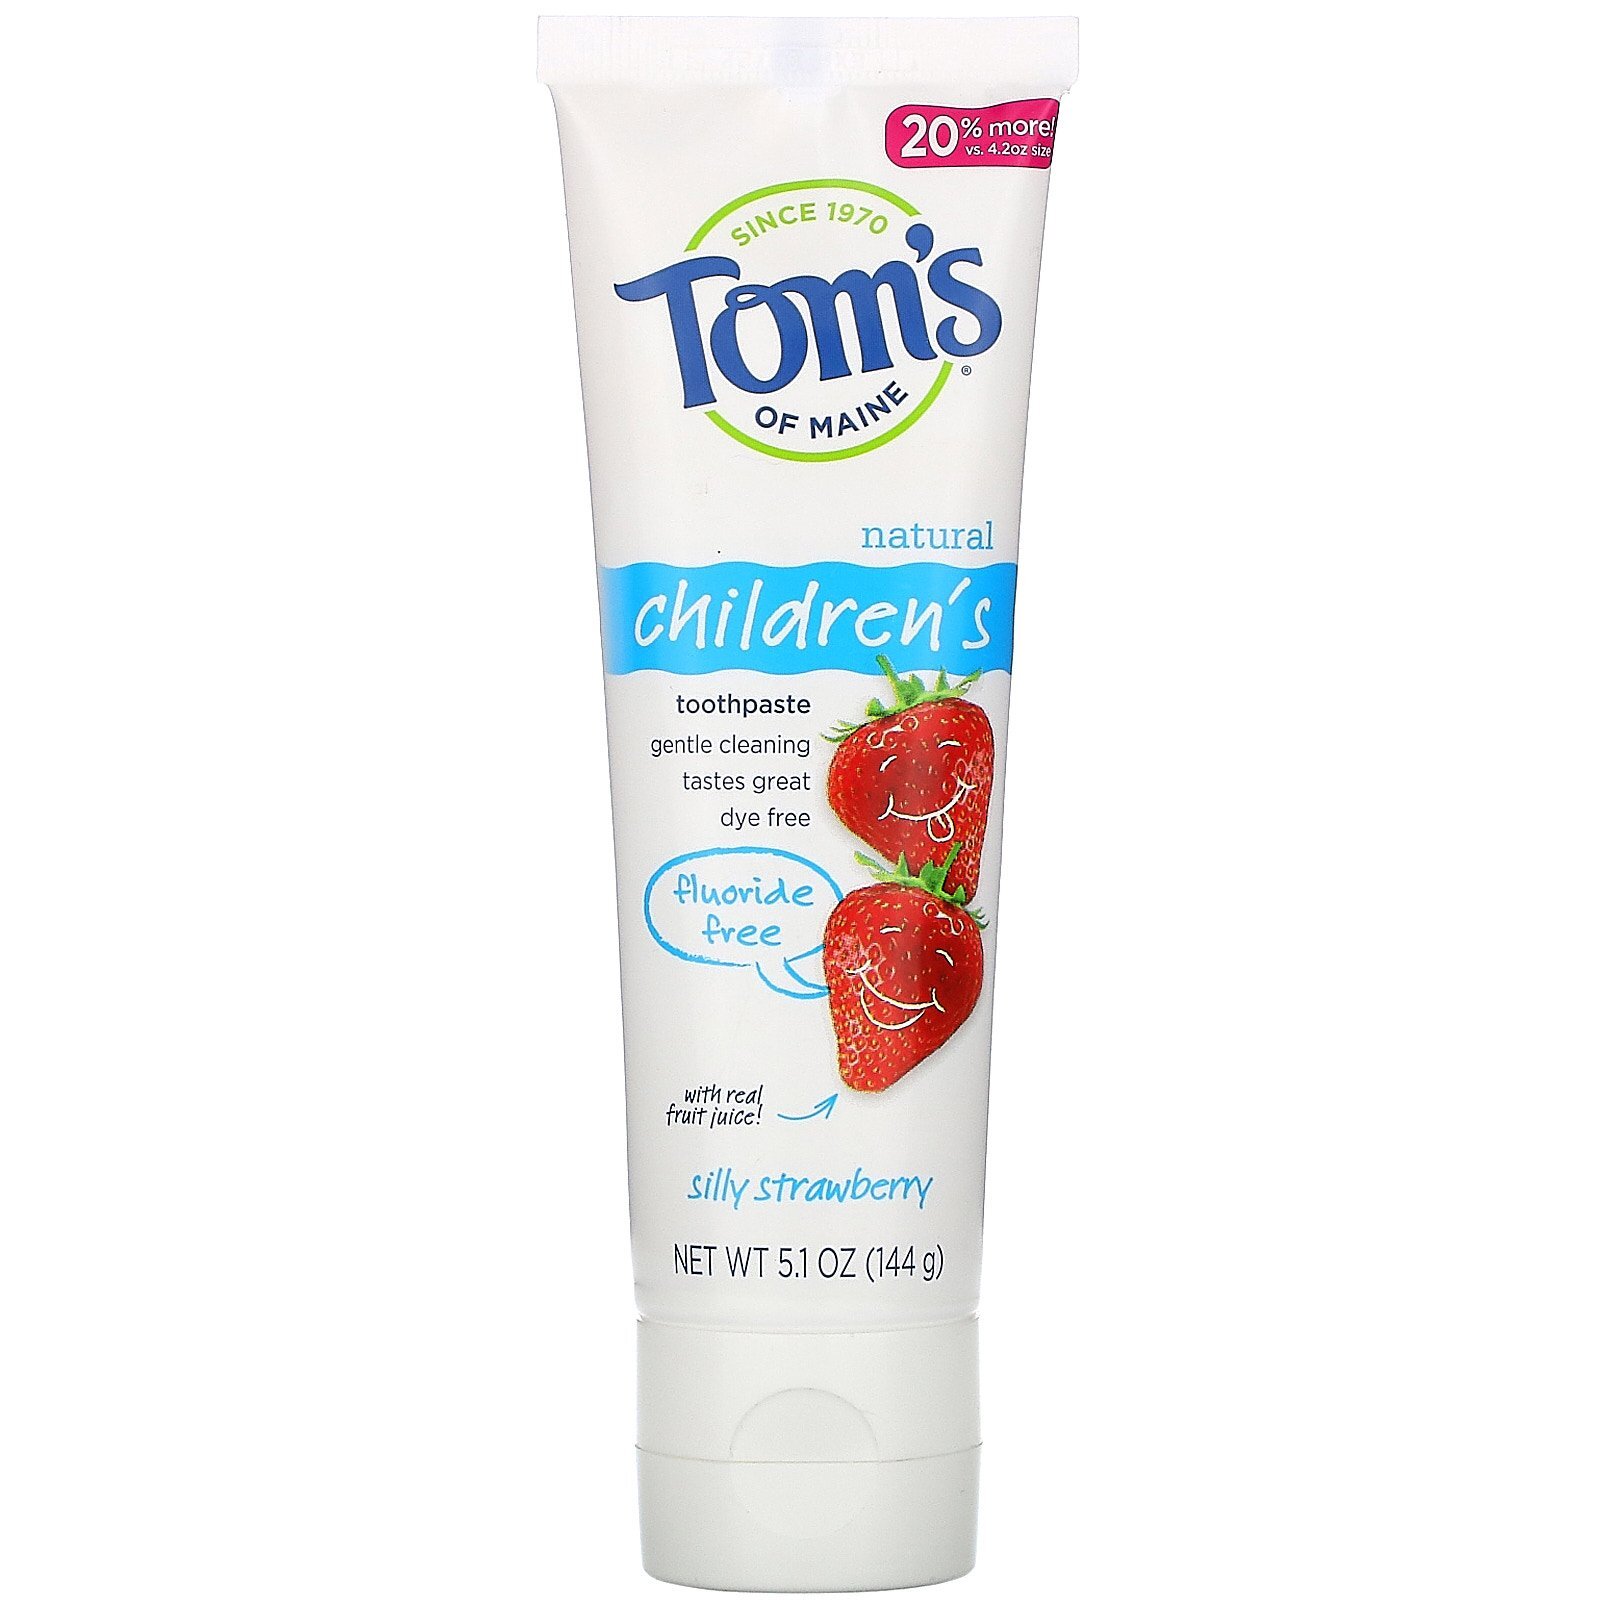 Kem đánh răng cho bé Tom’s of Maine Natural Children’s Fluoride-Free Toothpaste, Silly Strawberry, 5.1oz – 144g